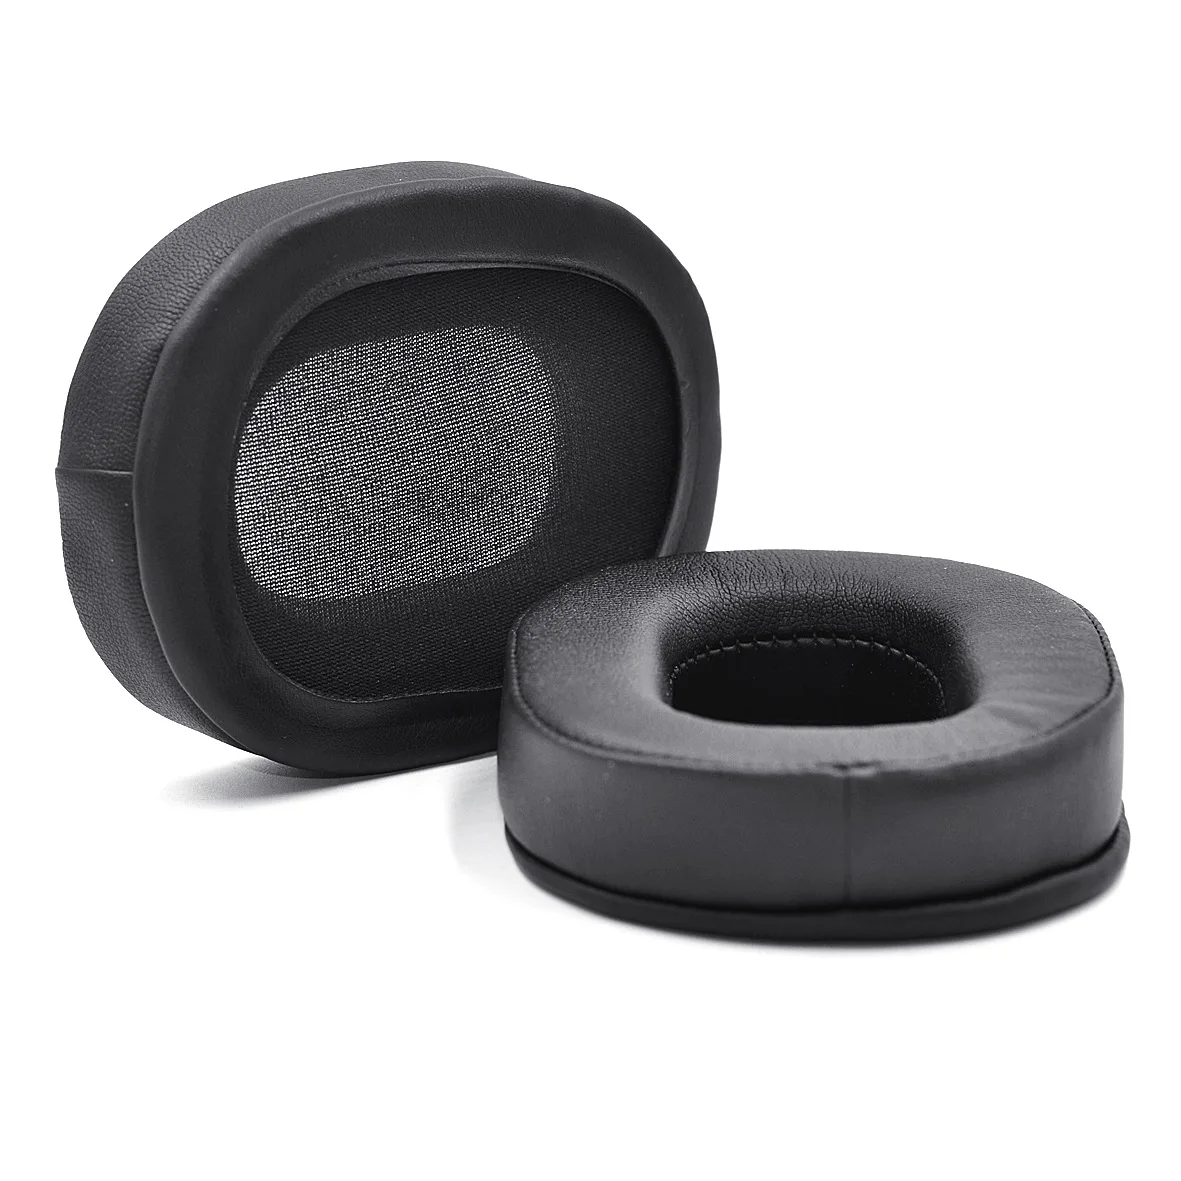 

Earpads For JBL E65 BTNC Headsets Accessories Replace Soft Sponge Black Ear Pads Cushion Covers Earmuffs Headphones Repair Parts